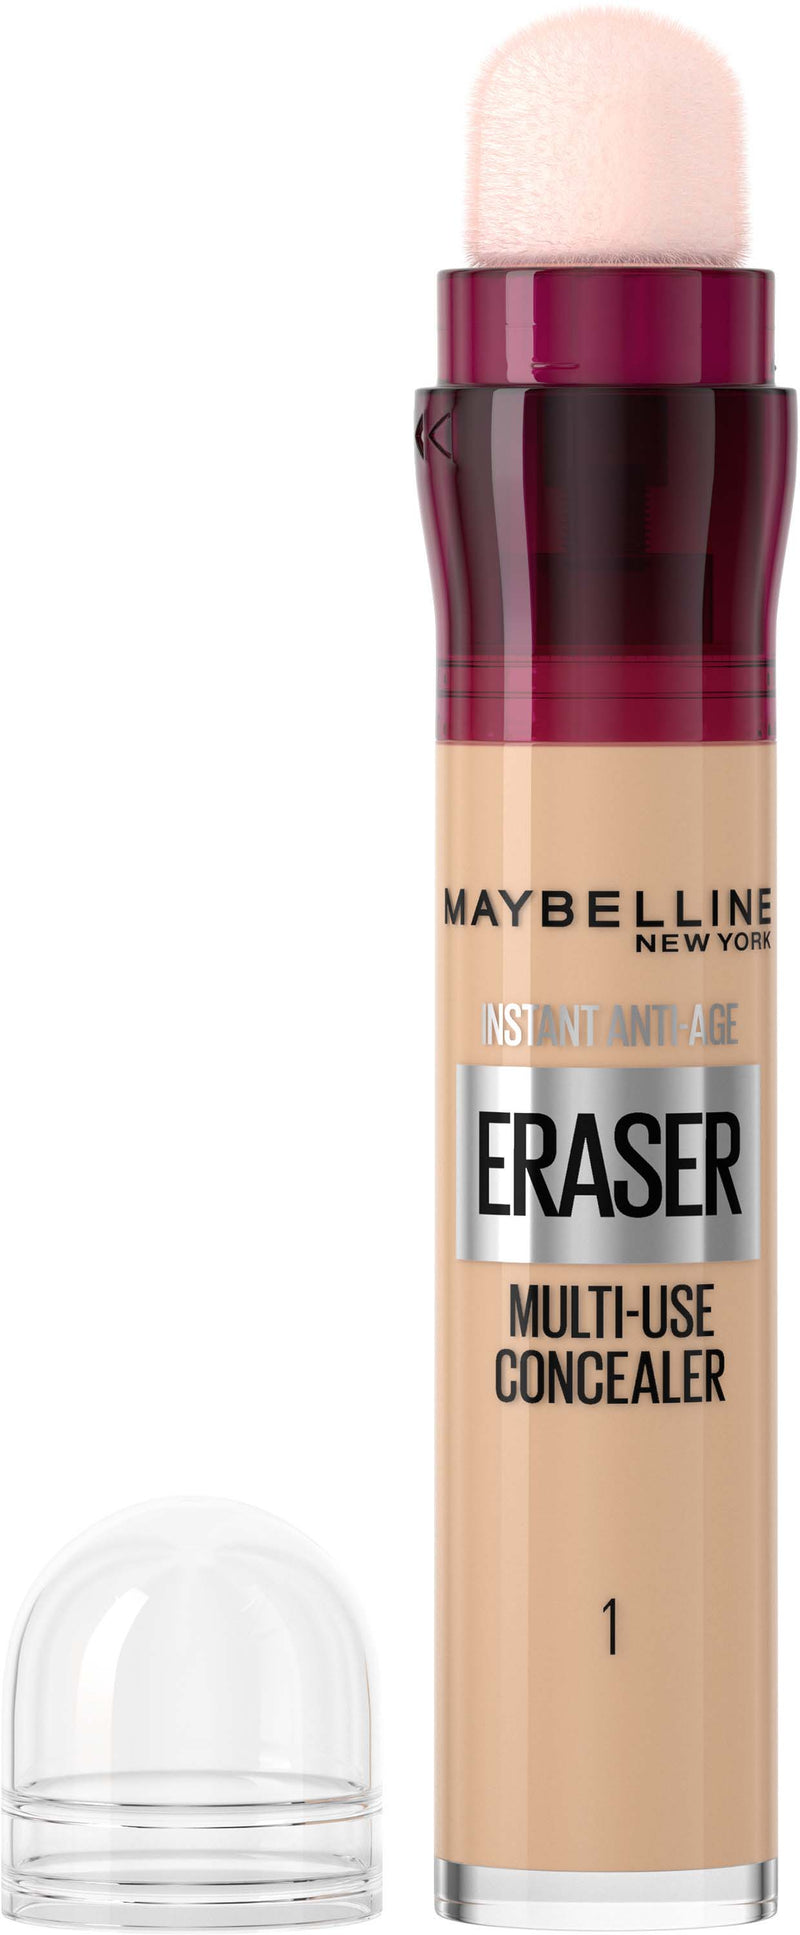 Maybelline New York Instant Anti-Age Eraser Multi-Use Concealer 1 Light